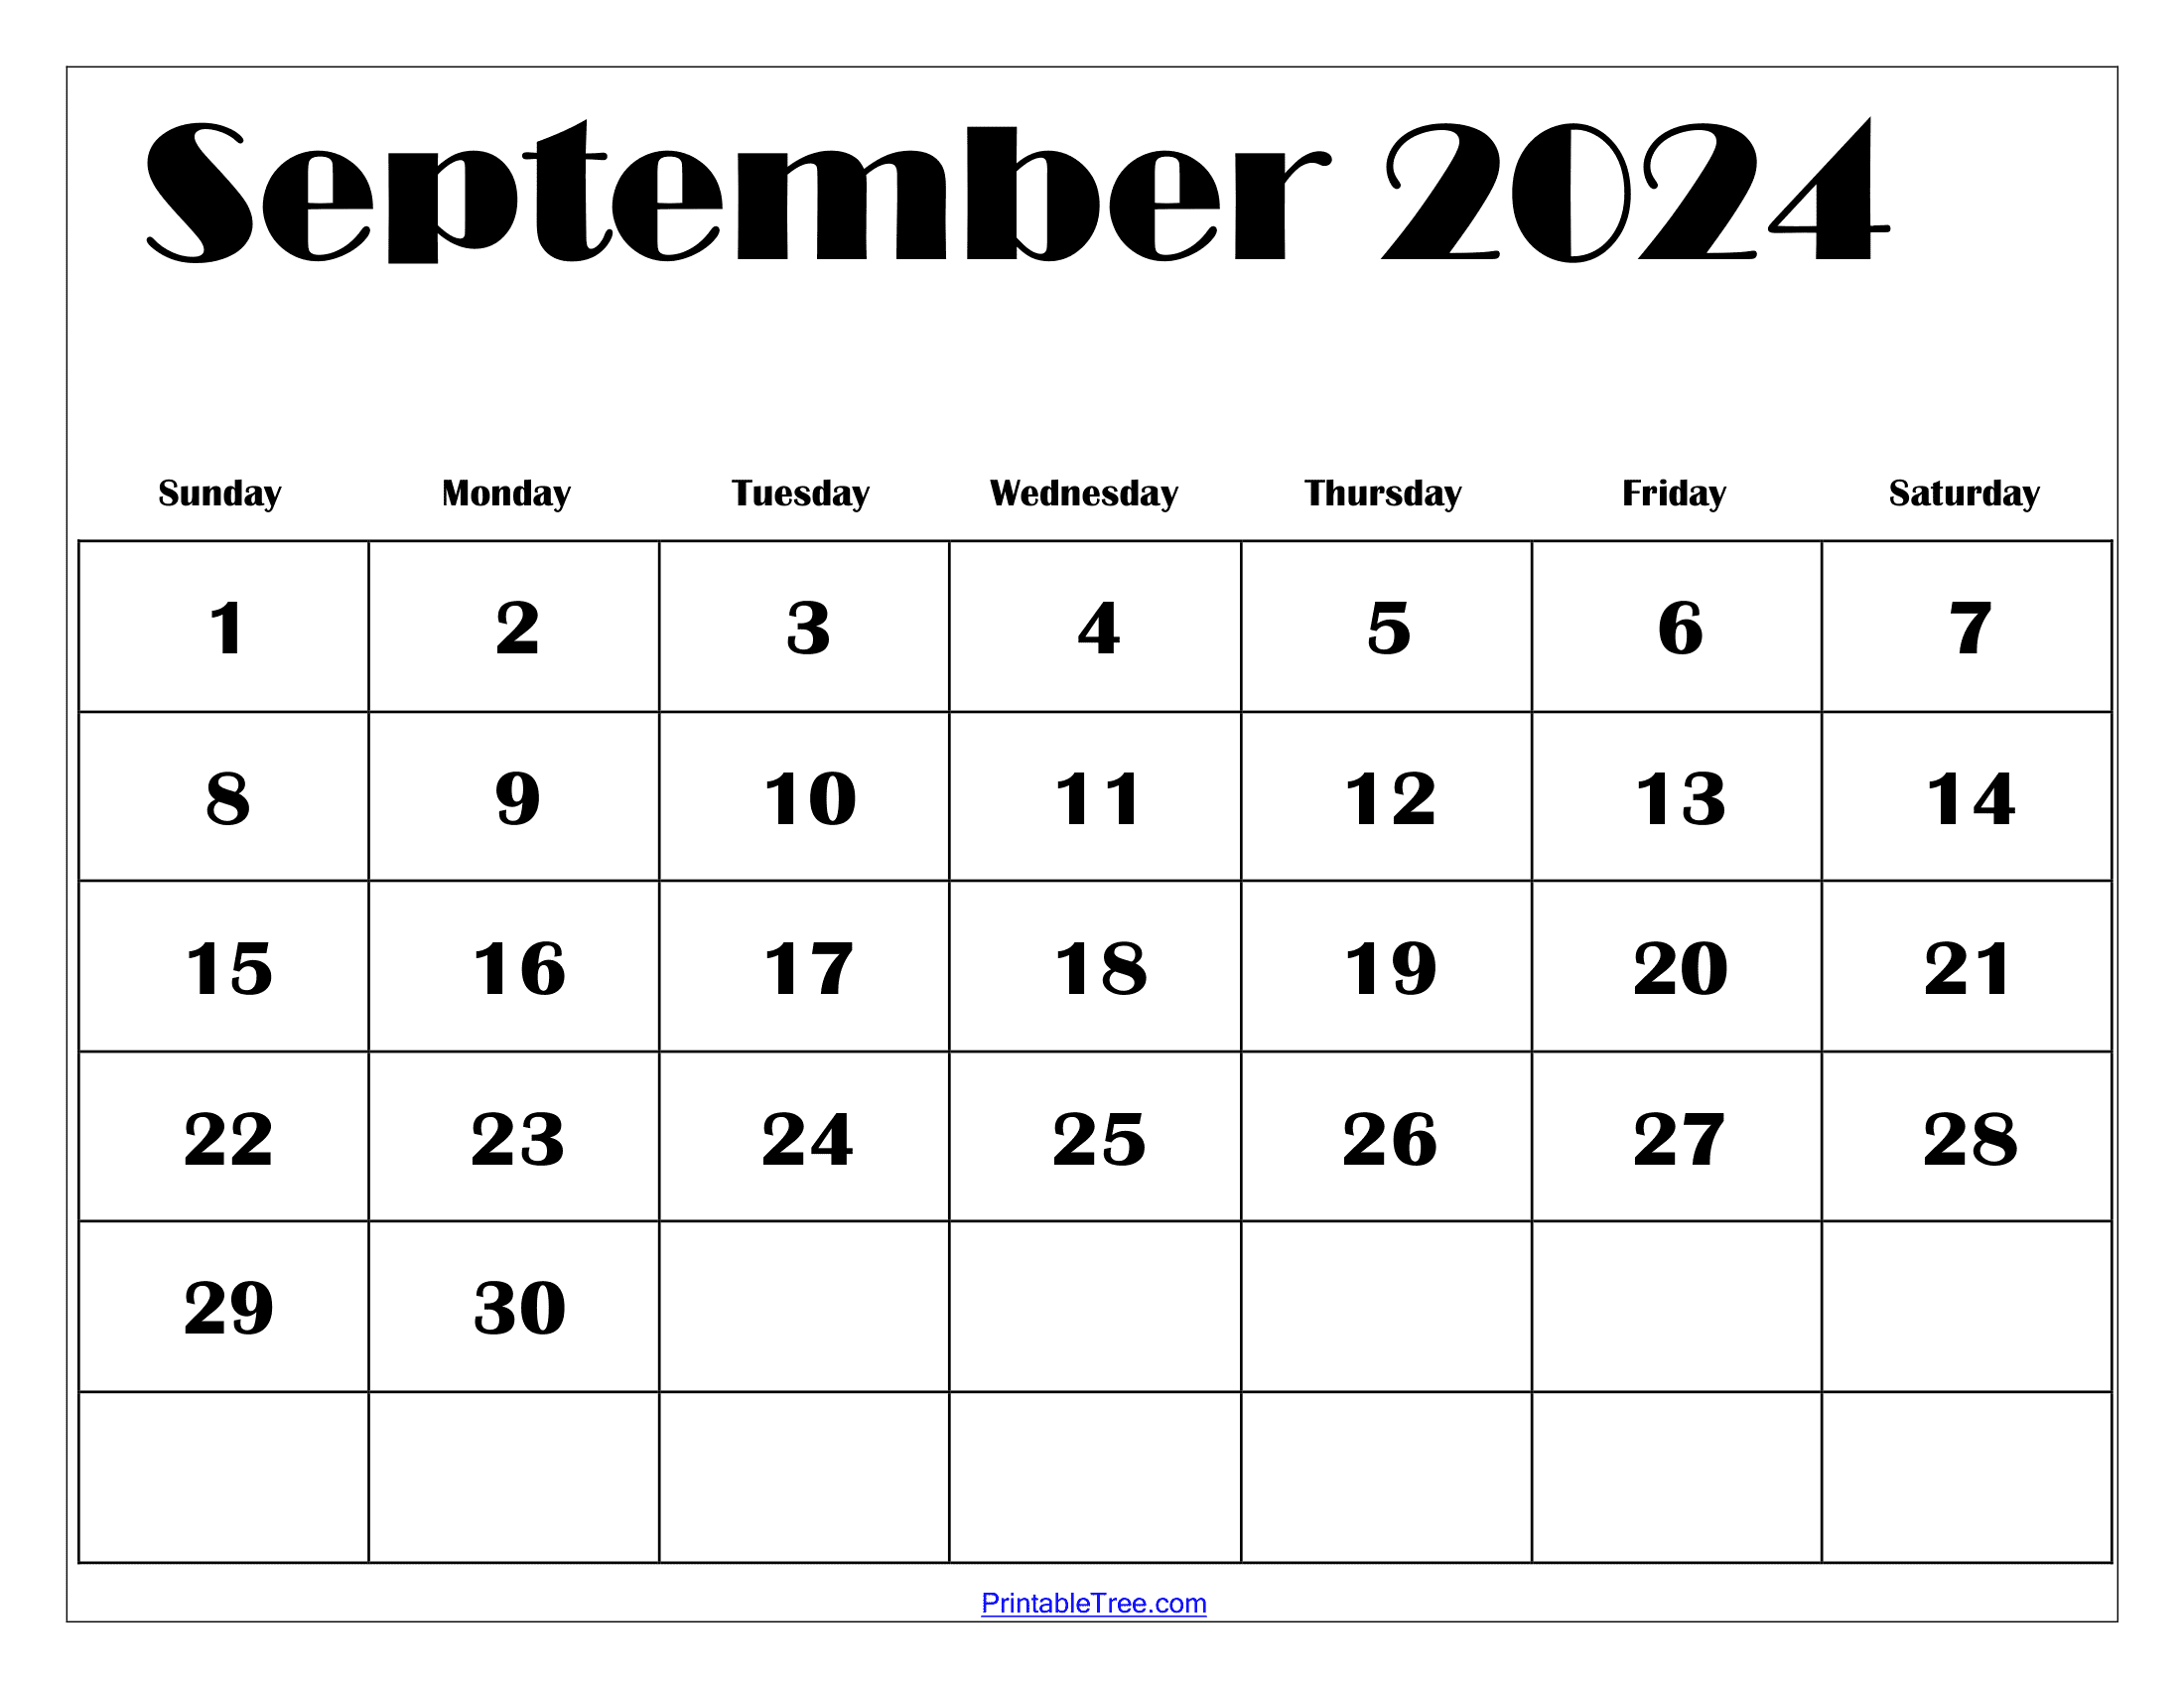 September 2024 Calendar Printable Pdf With Holidays for September 2024 Printable Calendar Free